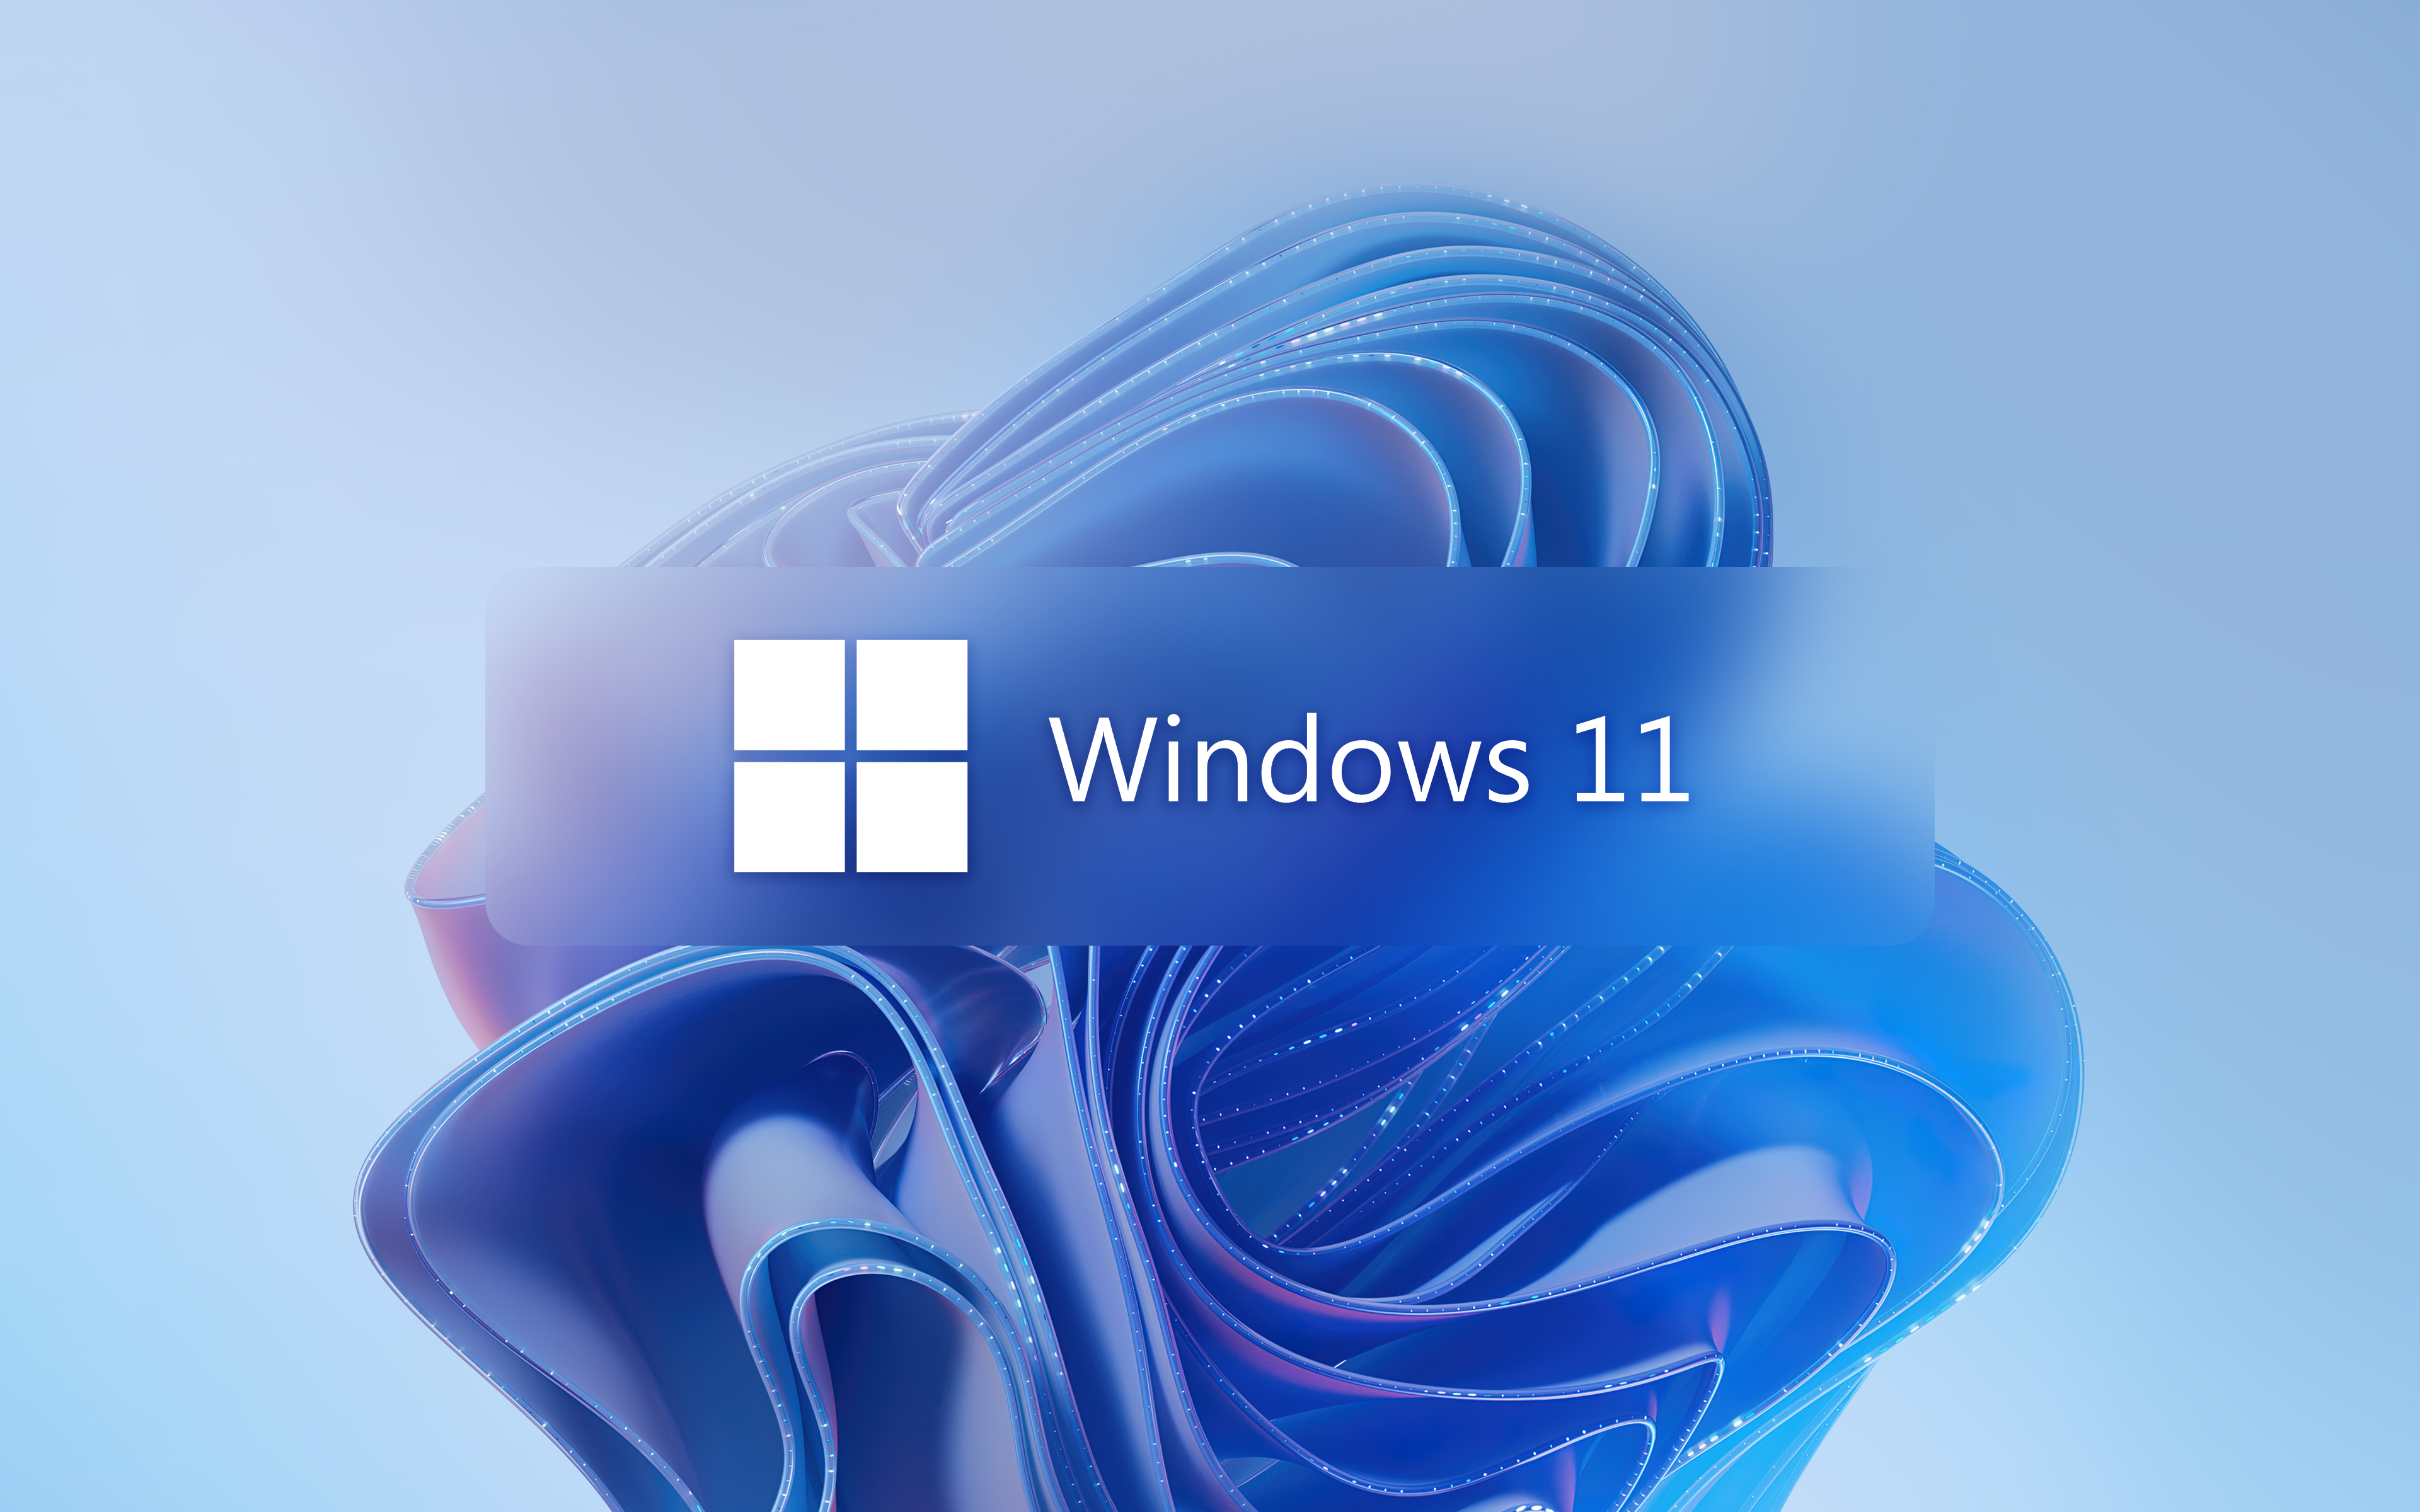 General 3840x2400 digital art Windows 11 simple background logo Microsoft Windows blue blurred blurry background